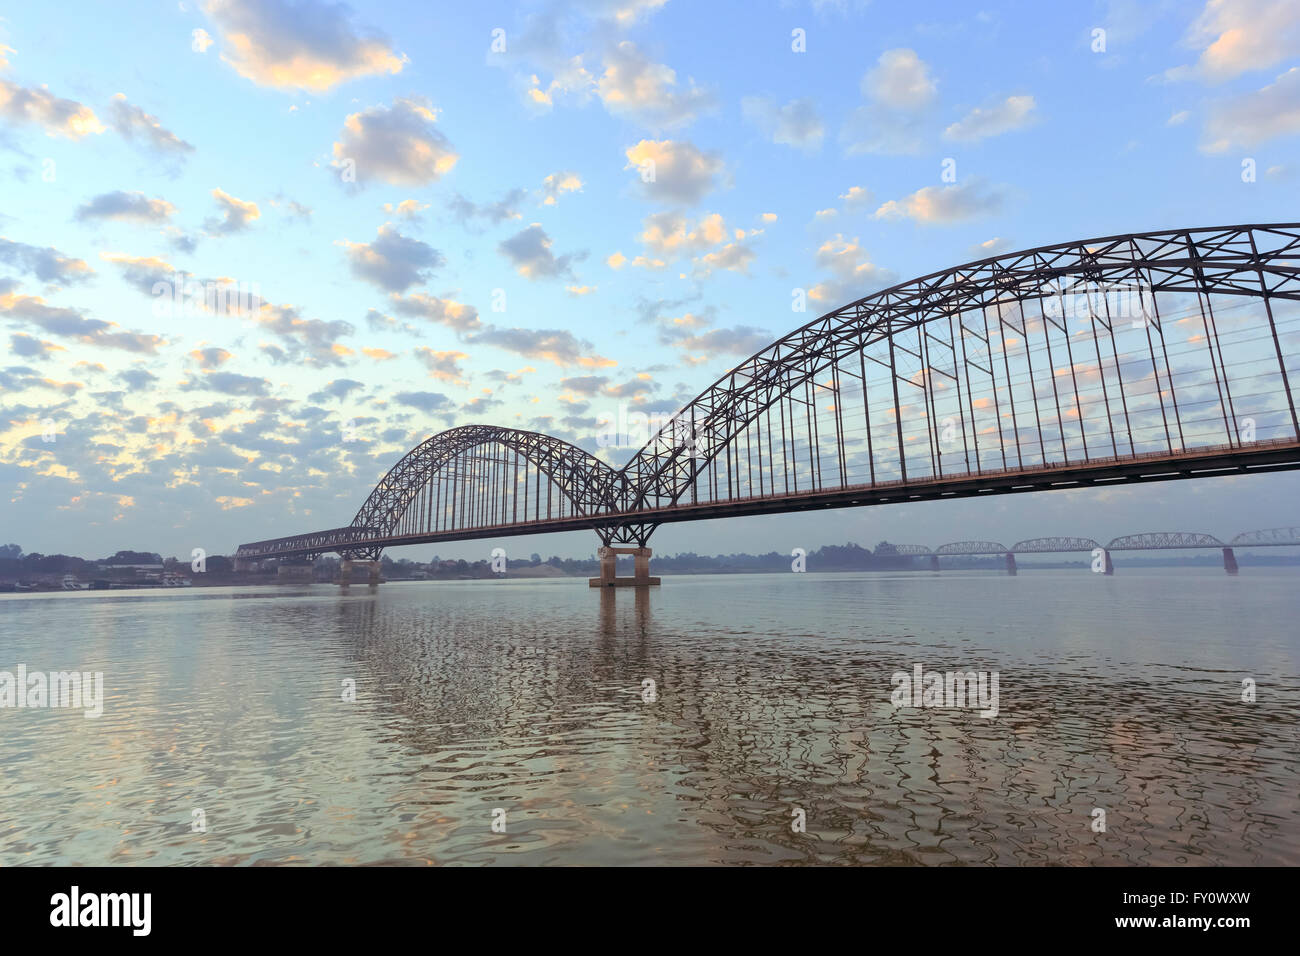 Irrawaddy (or Yadanabon) Bridge over the Irrawaddy River, Sagaing, near Mandalay, Myanmar (Burma) on a misty, foggy morning Stock Photo